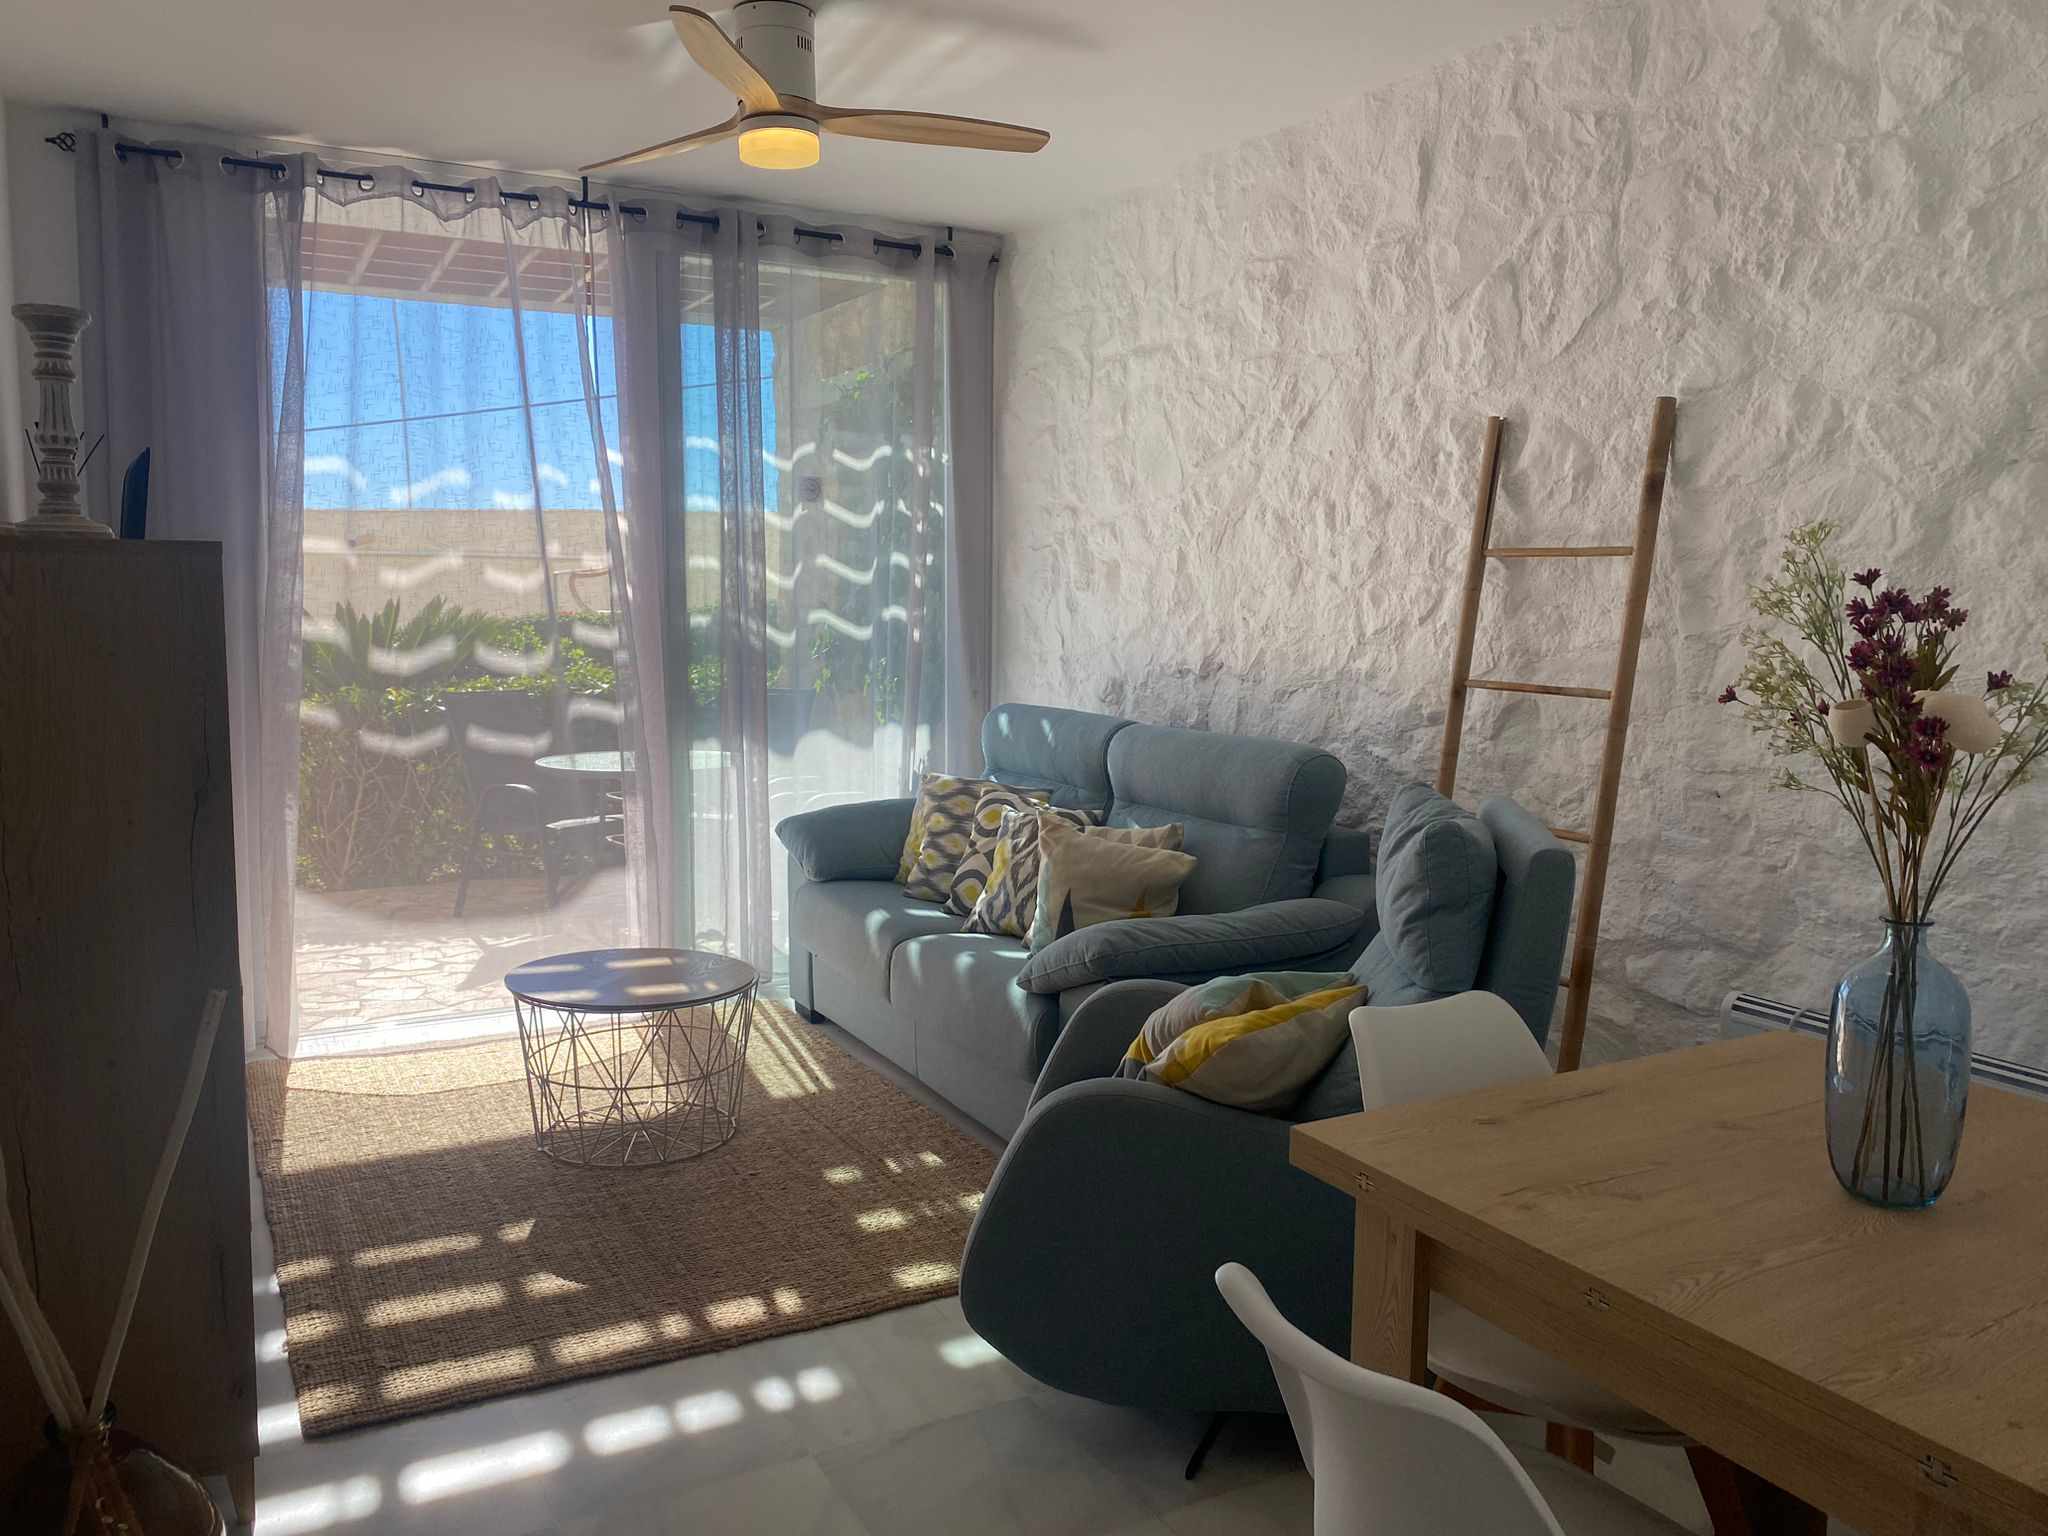 Bello apartamento ideal para familias : Apartamento en alquiler en Mojácar, Almería